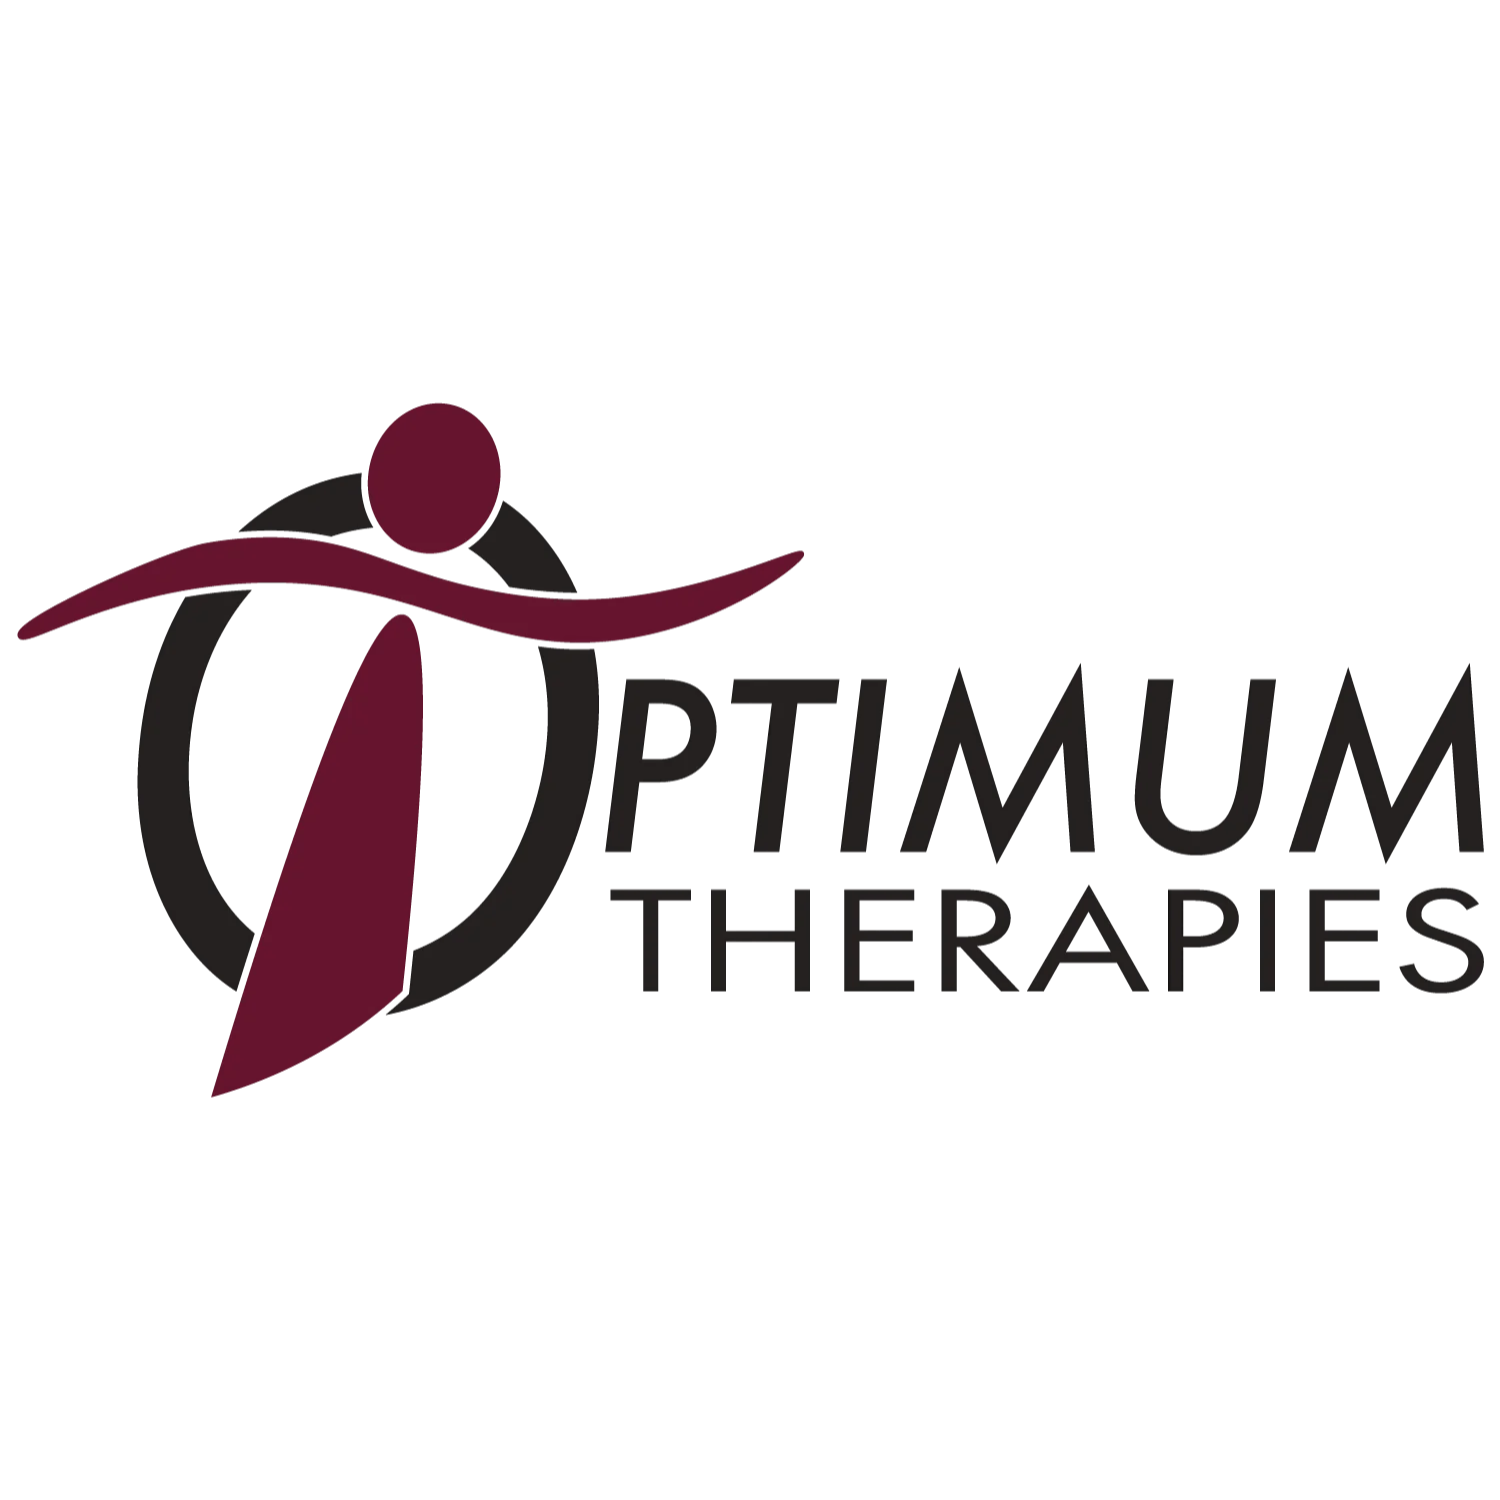 Optimum Therapies - Rice Lake, WI 54868 - (715)236-3610 | ShowMeLocal.com